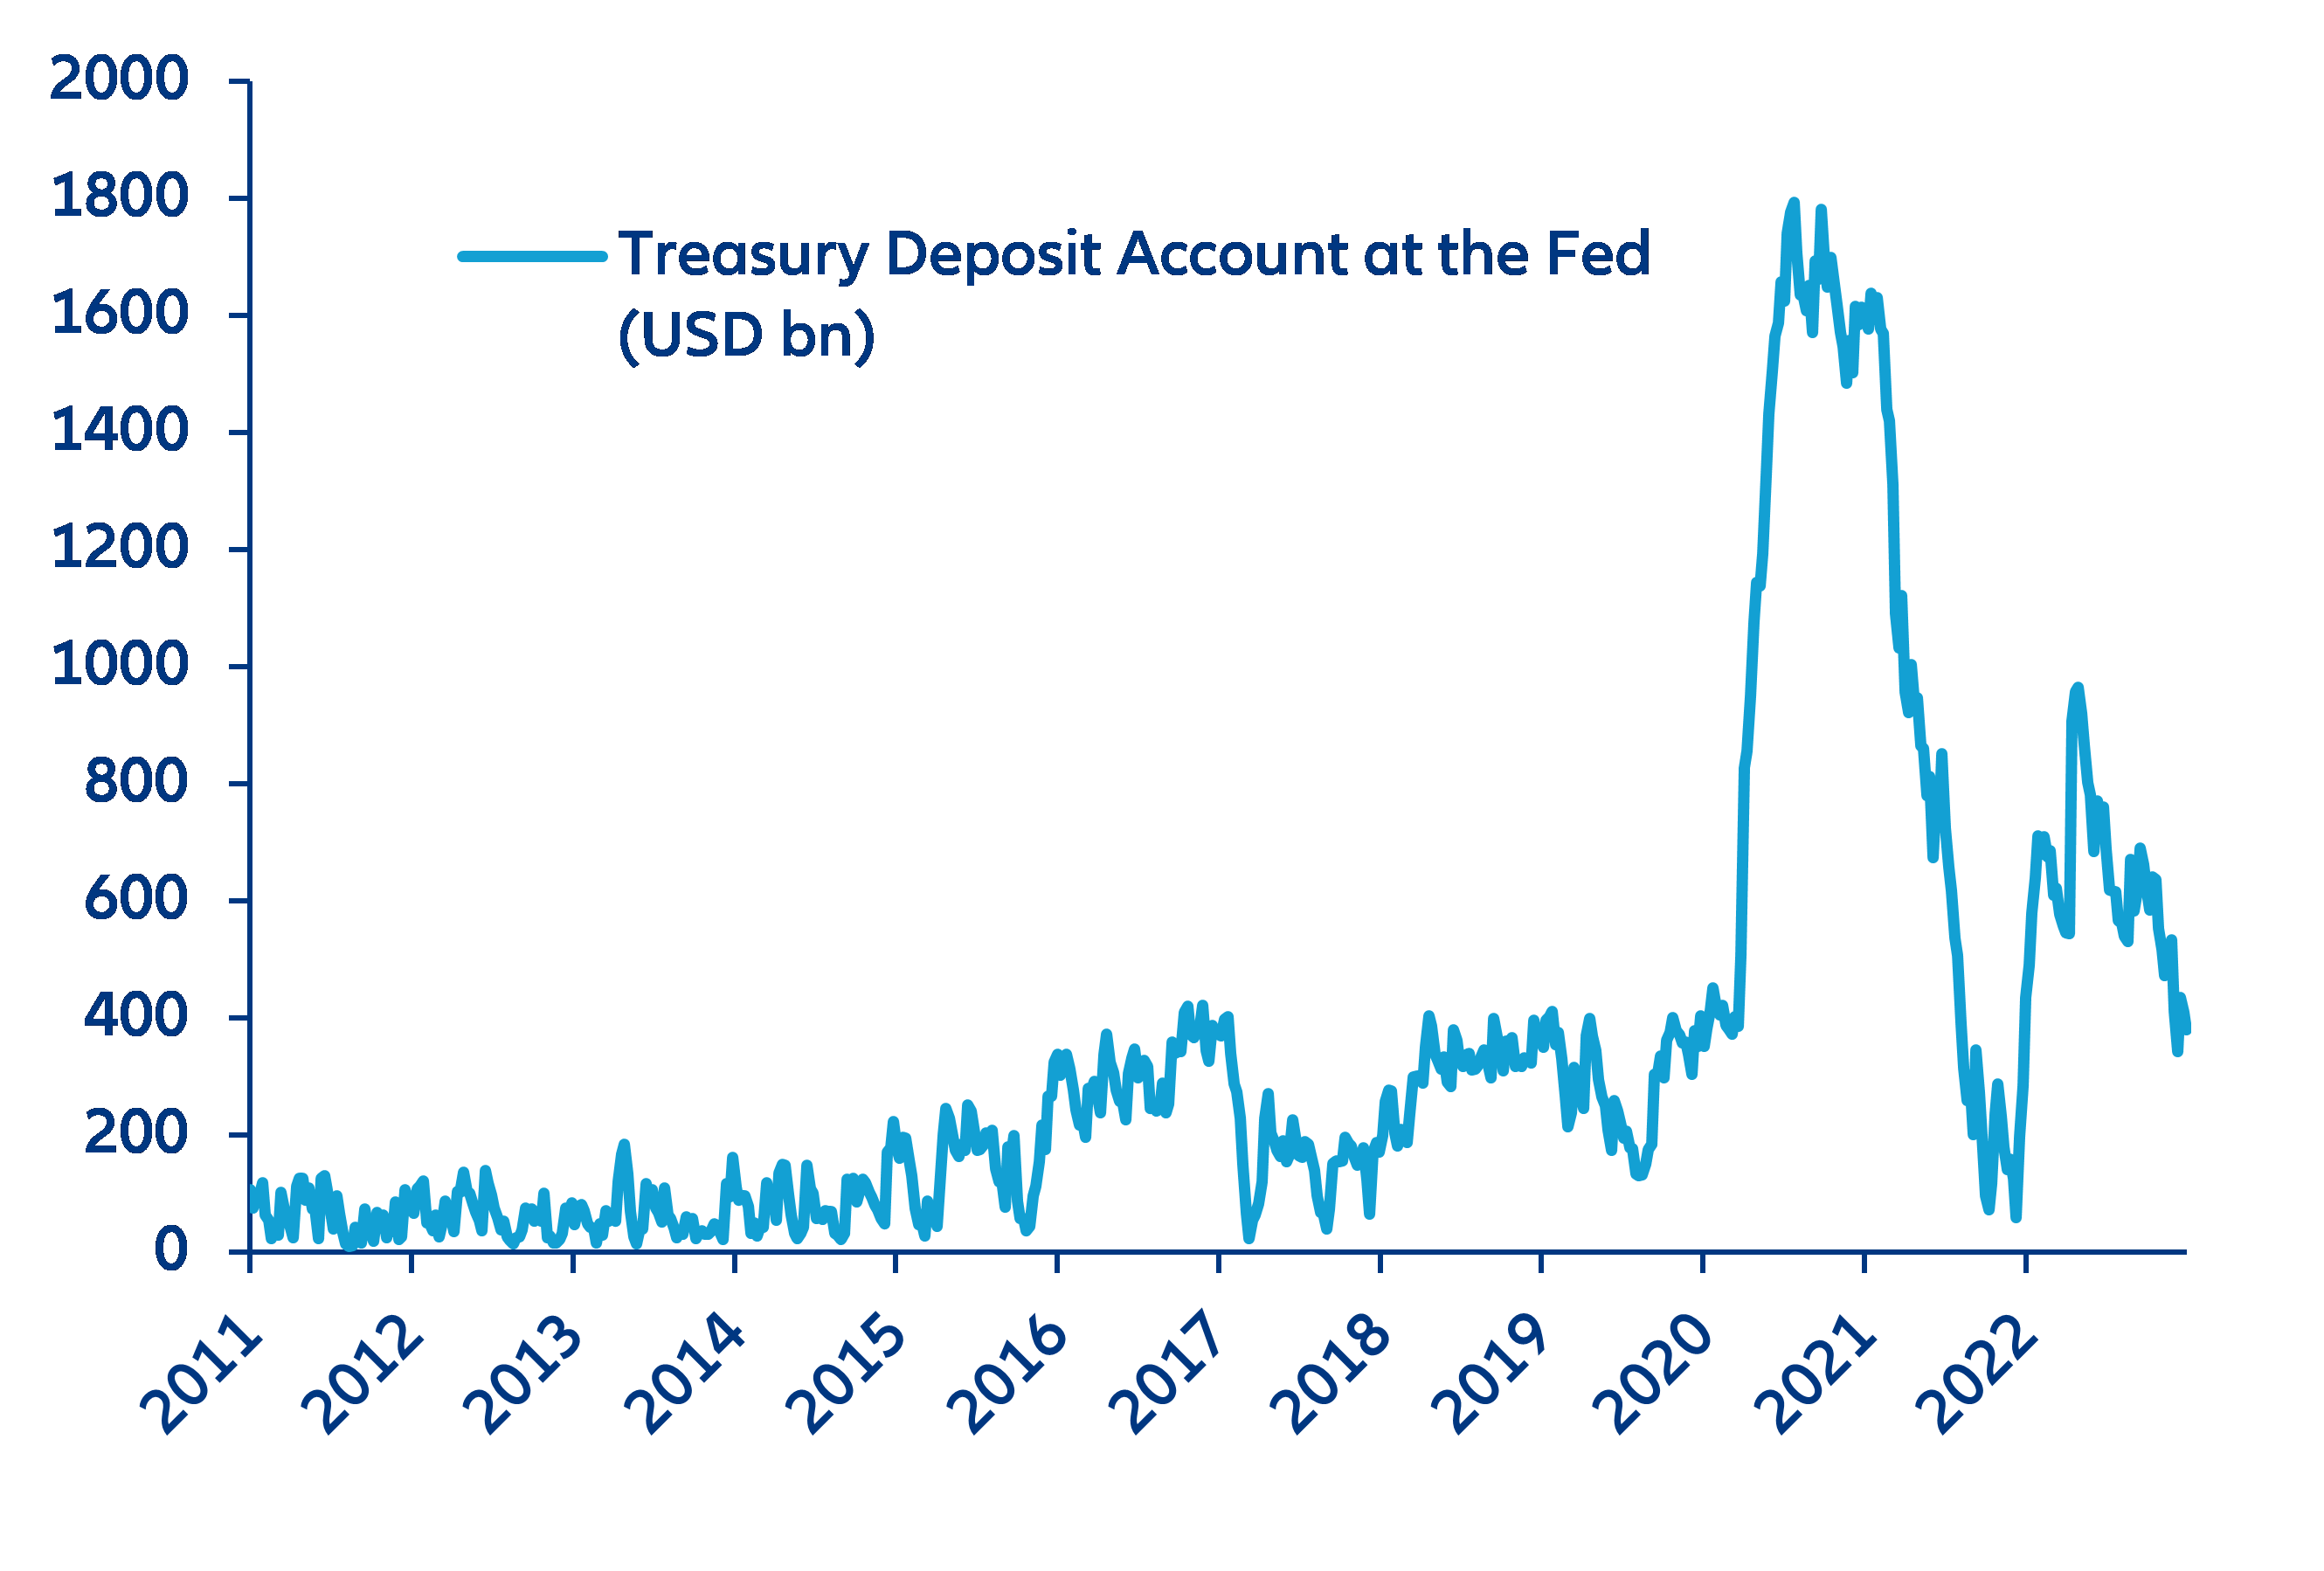 Figure 1: US Treasury deposit account at Federal Reserve (USD billion)